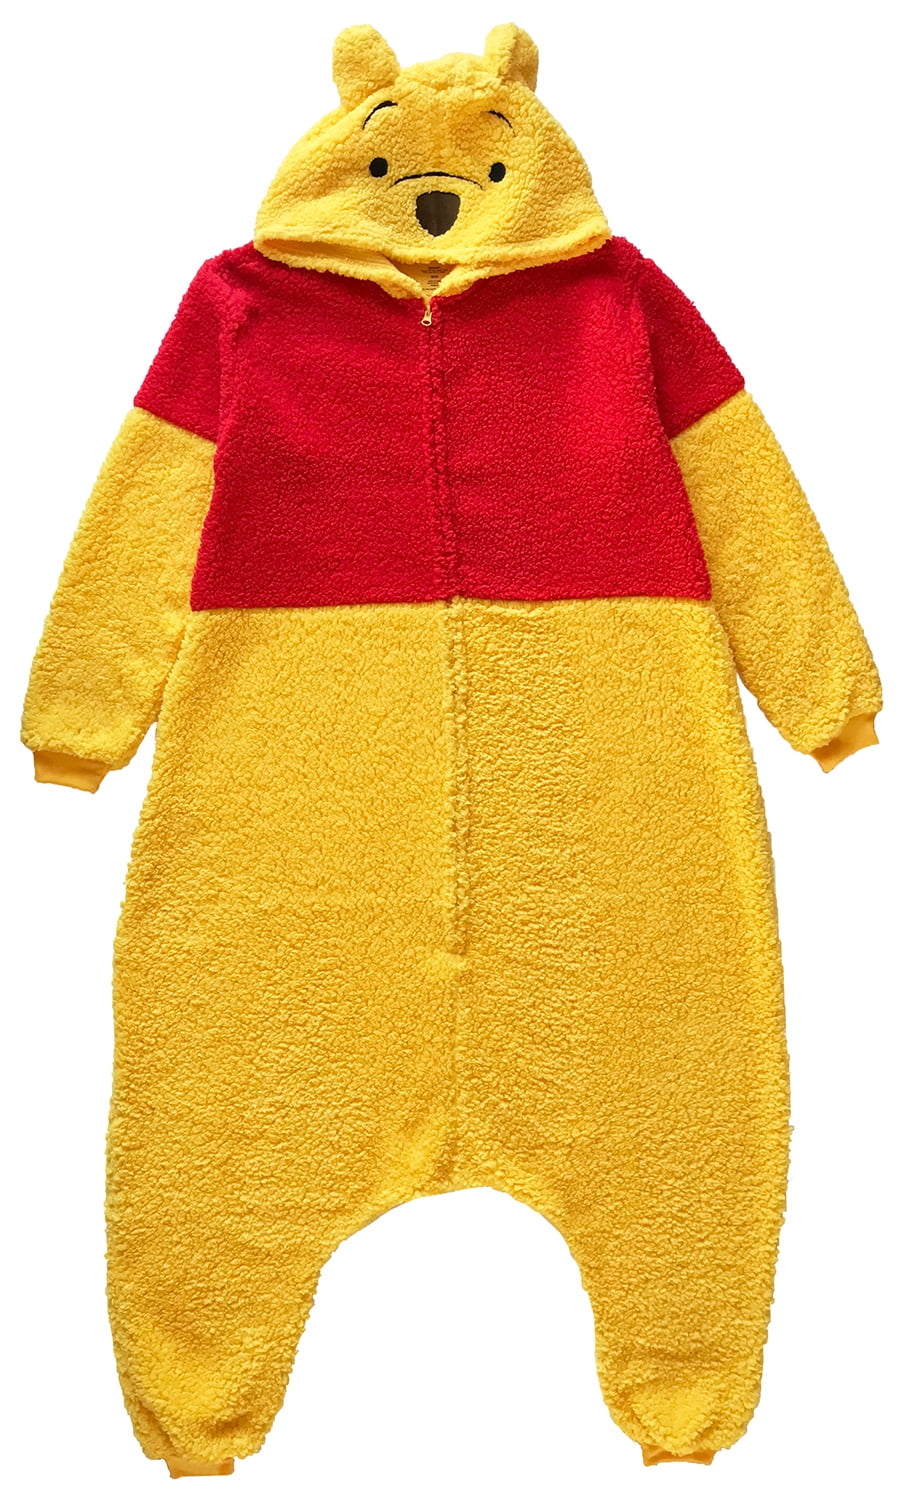 Disney Winnie The Pooh Adult Costume Kigurumi Union Suit Pajama Outfit (SM) - Walmart.com